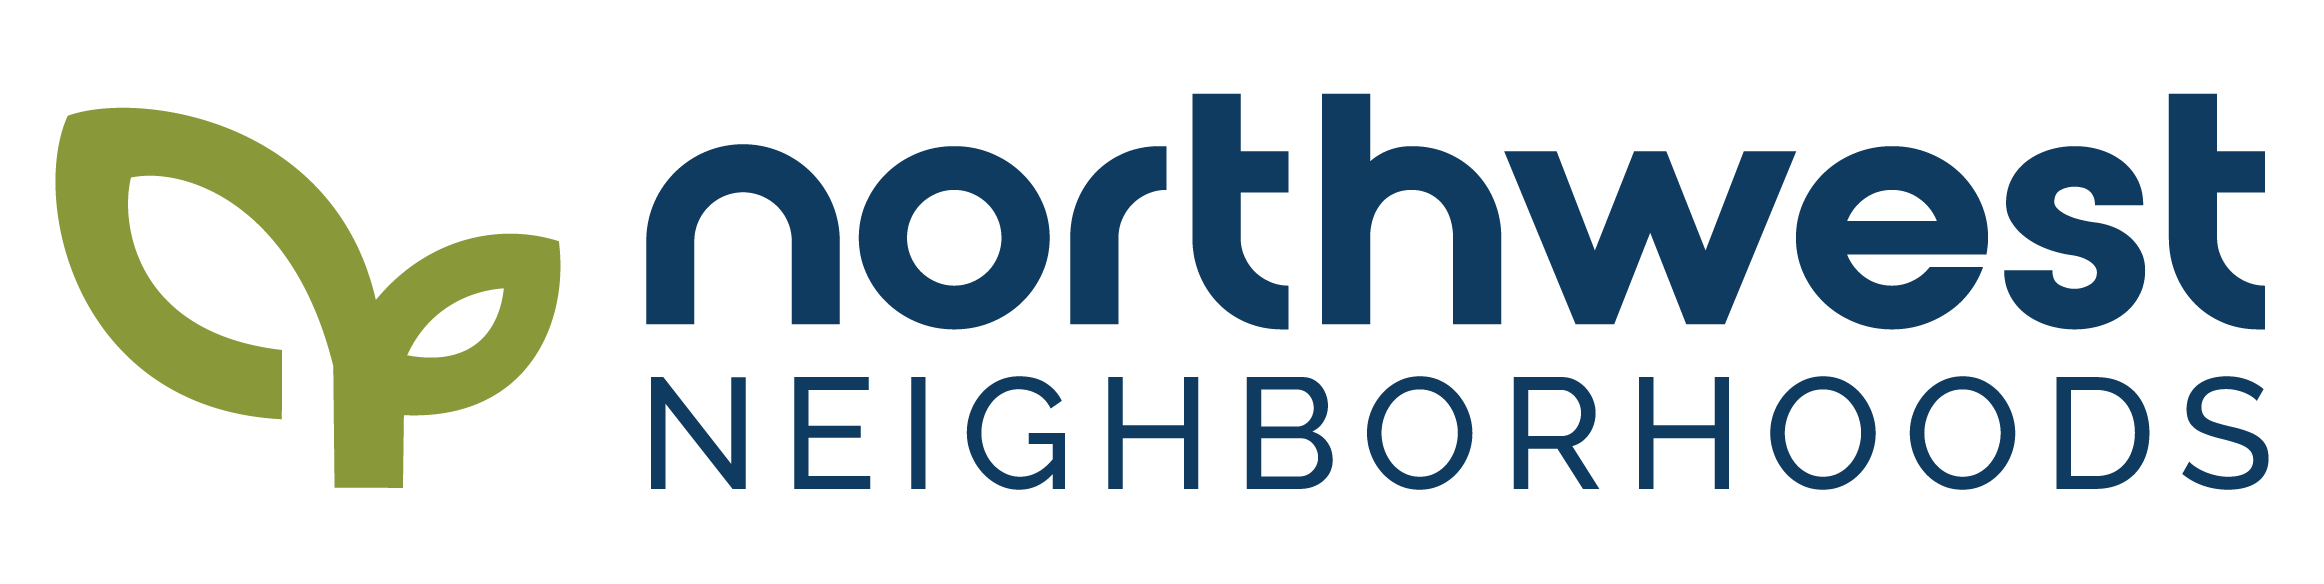 Northwest Neighborhoods CDC Full Horizontal-Color